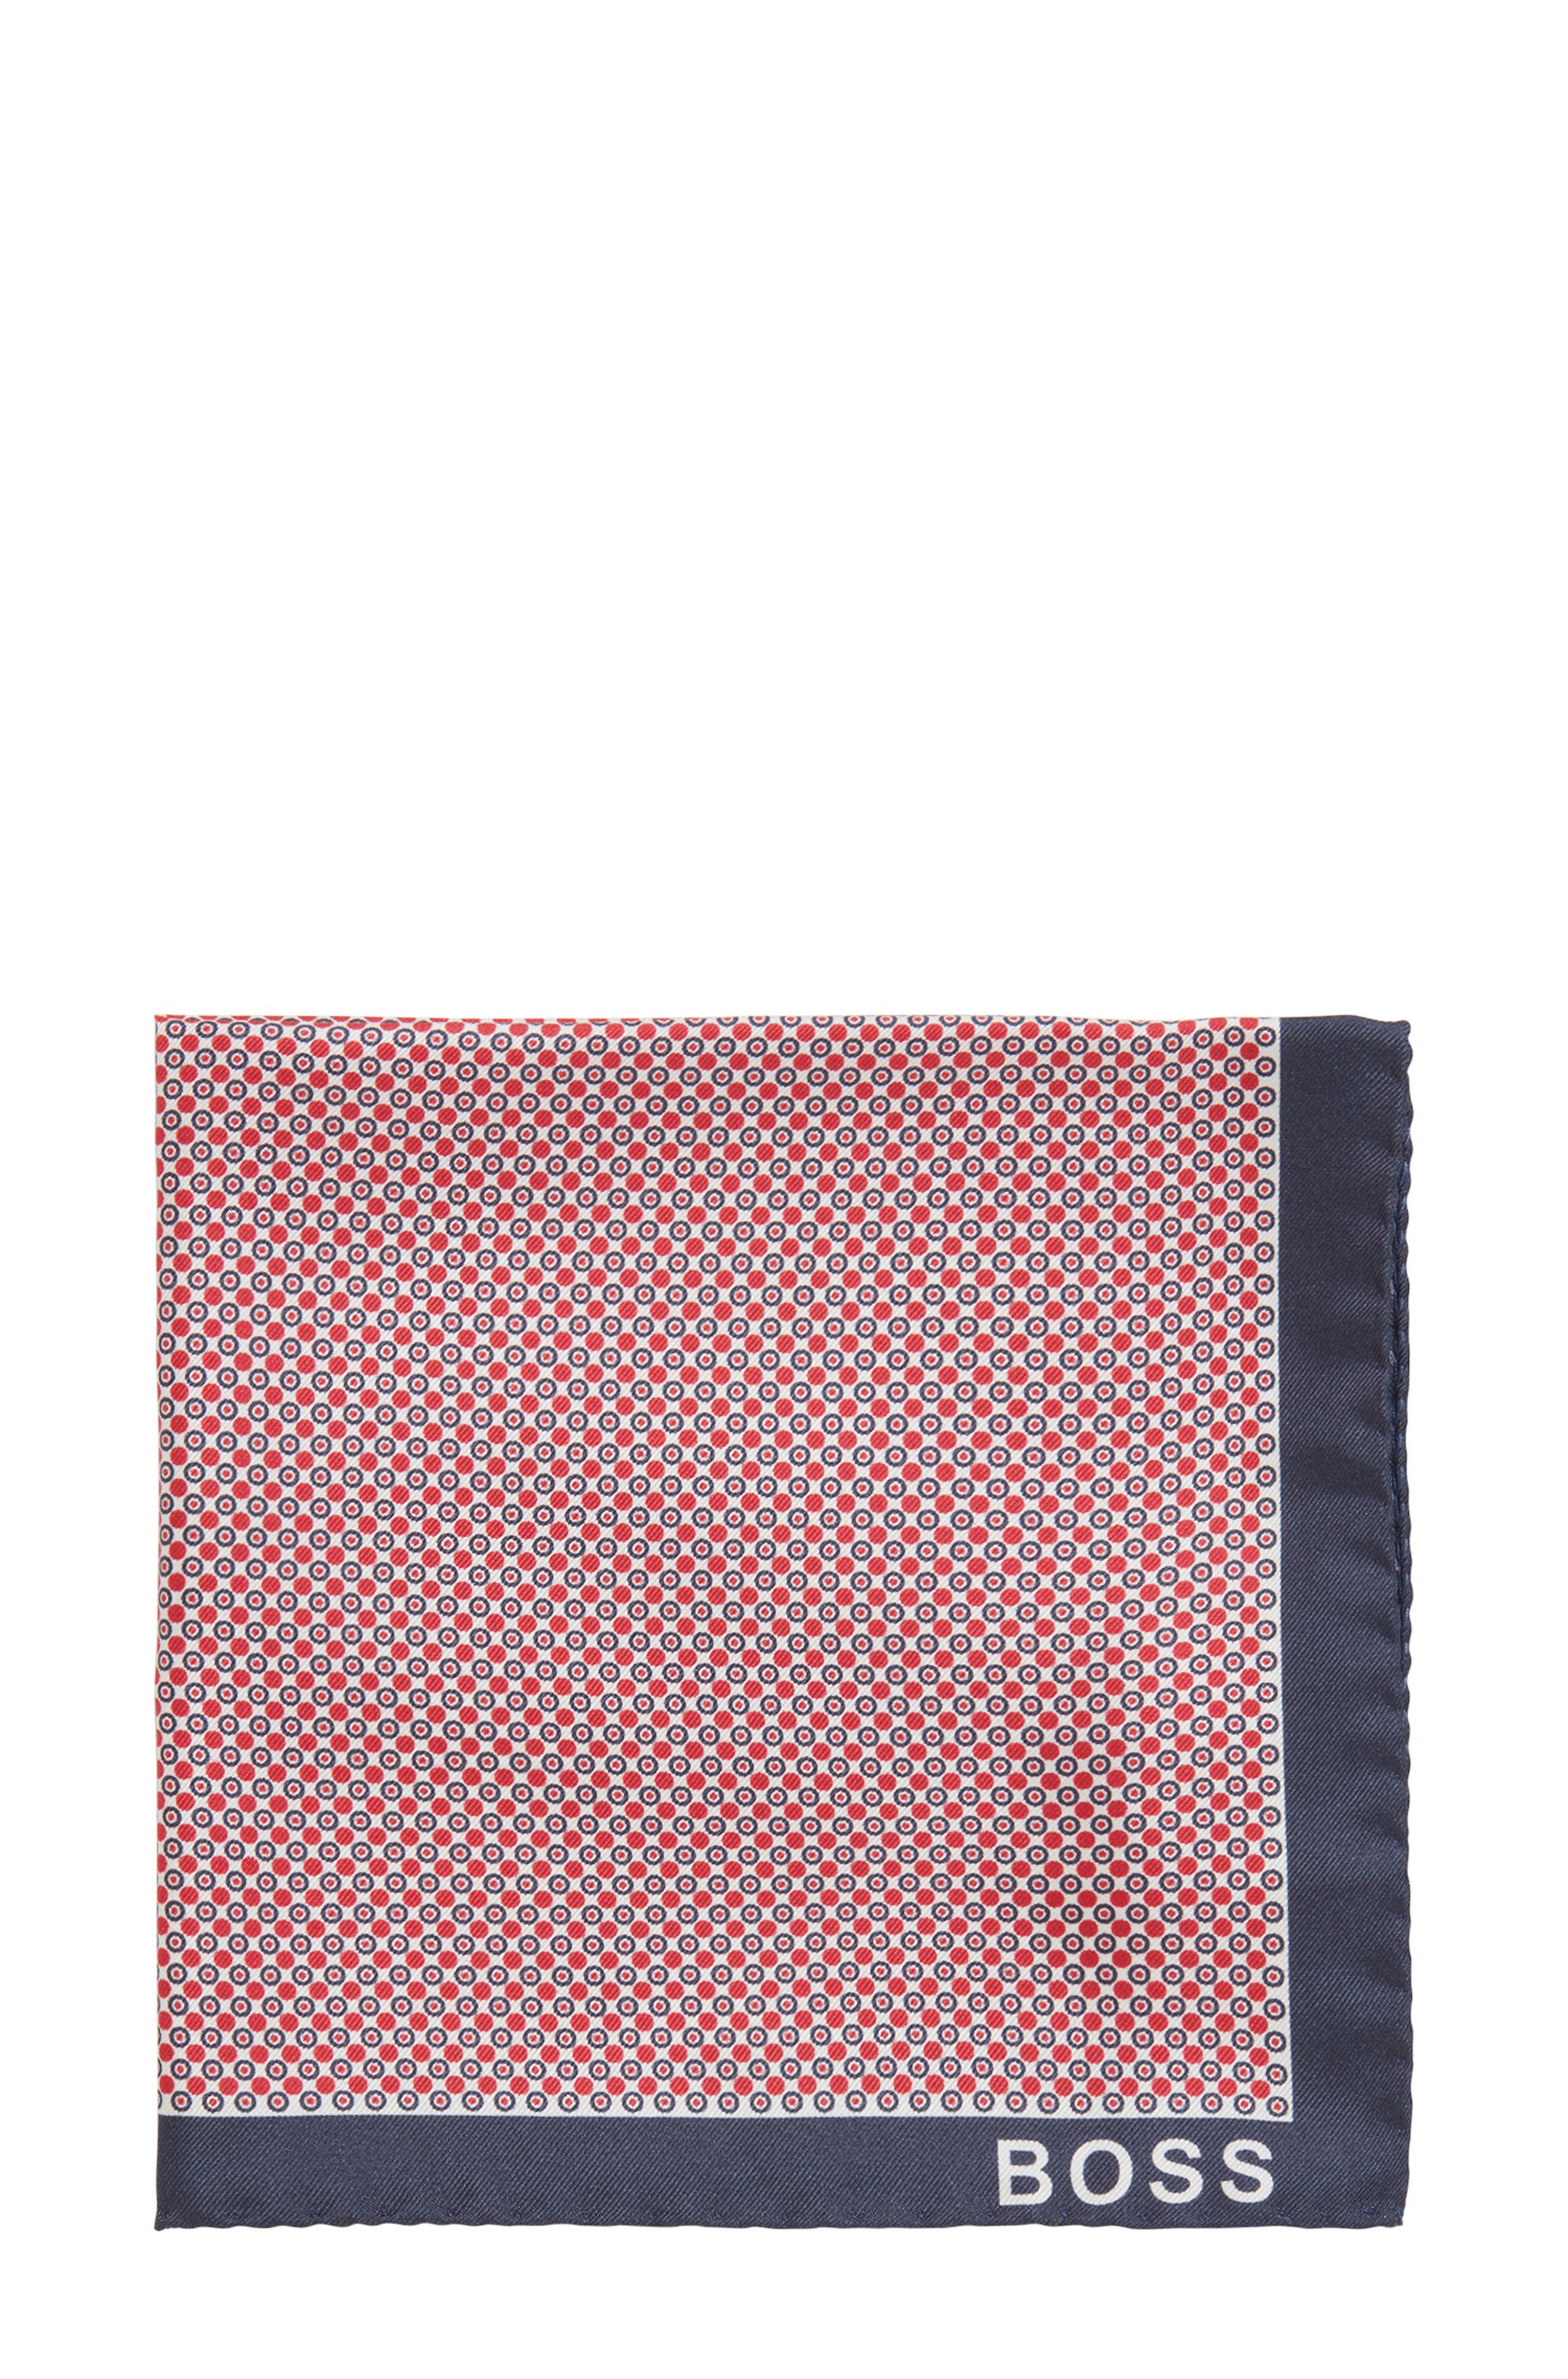 Pañuelo de bolsillo estampado elaborado en Italia con dobladillo enrollado., Rojo estampado